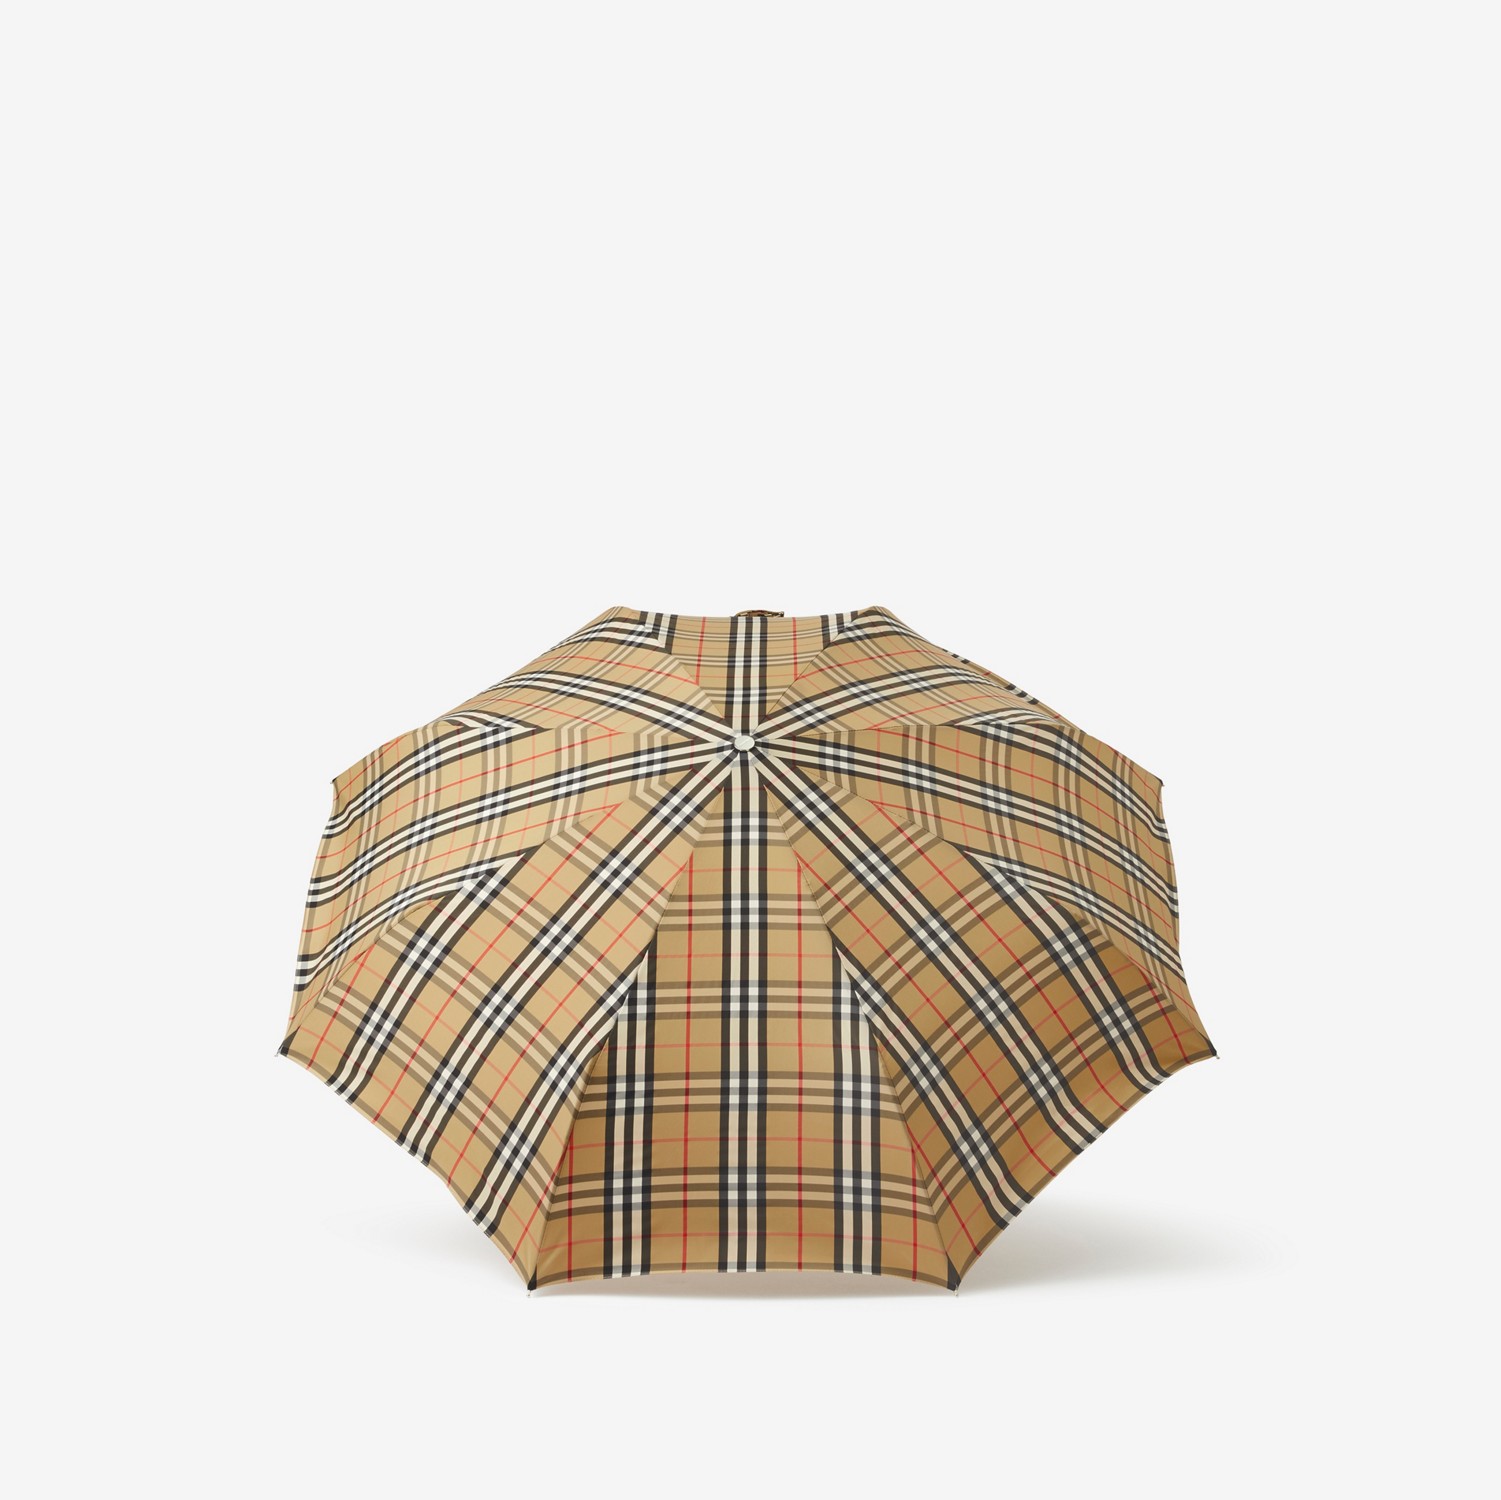 Vintage Check Folding Umbrella